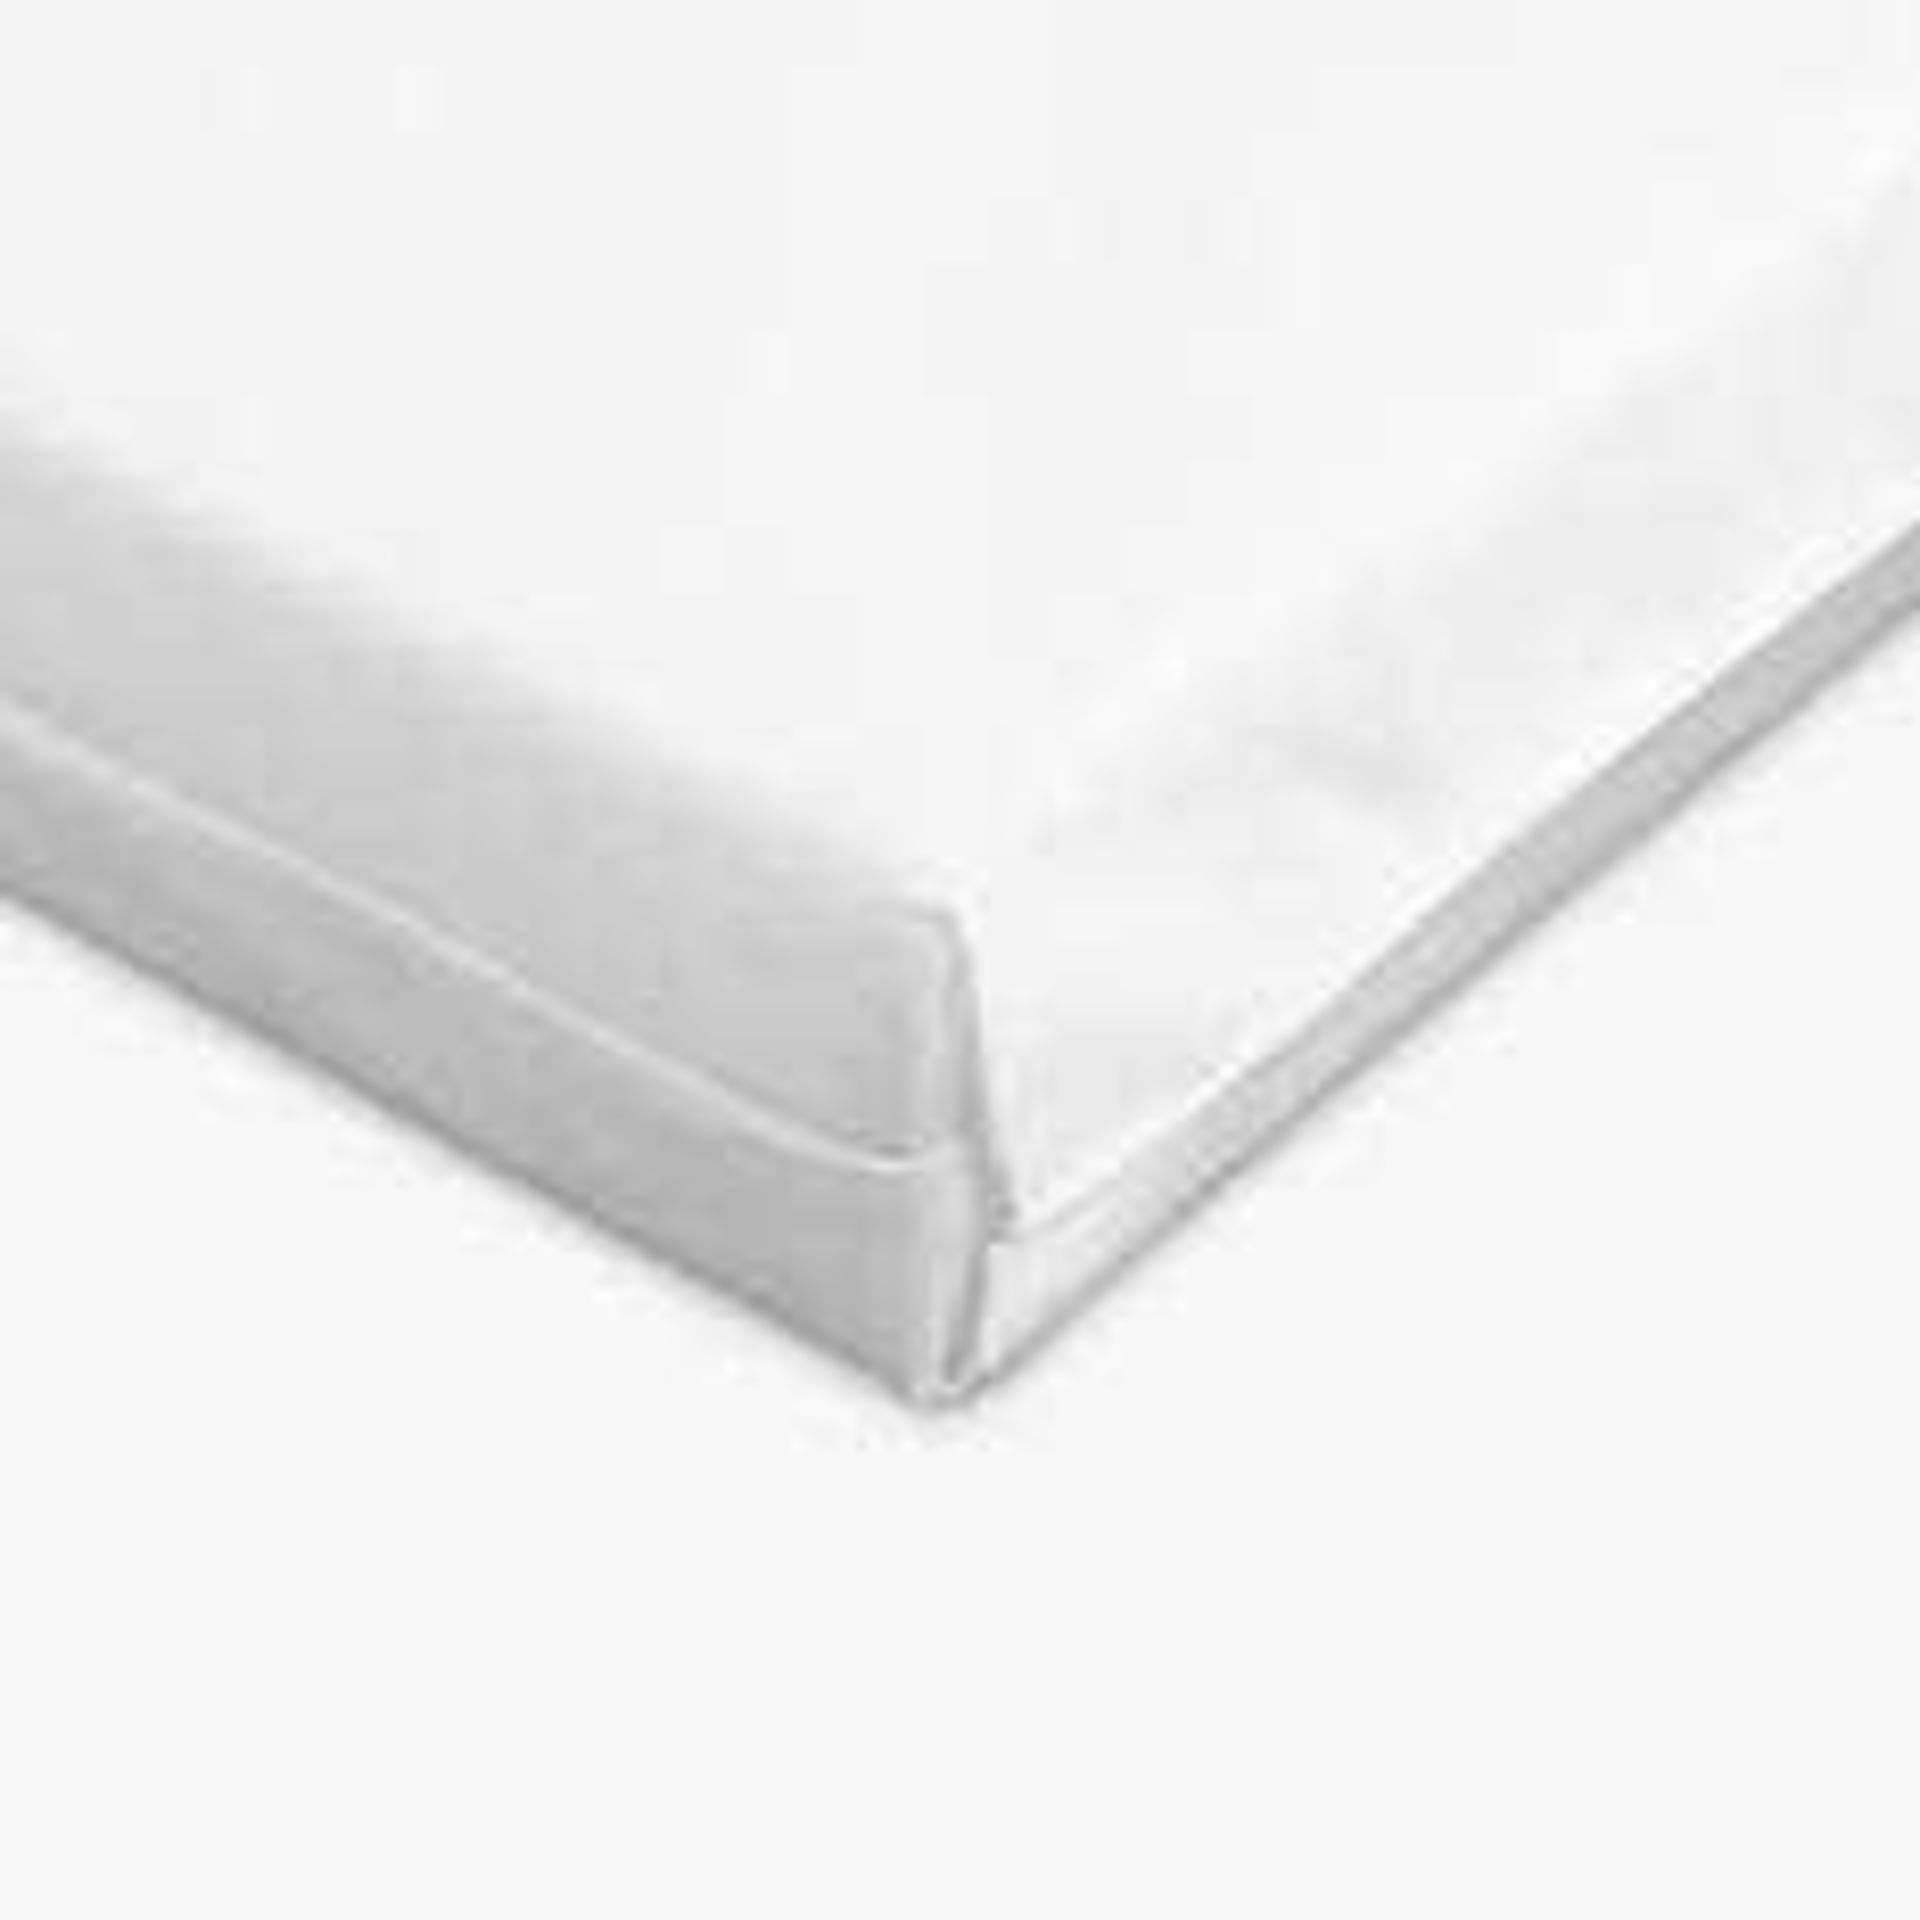 RRP £130 Bagged John Lewis Basic Foam Cot Bed Mattress